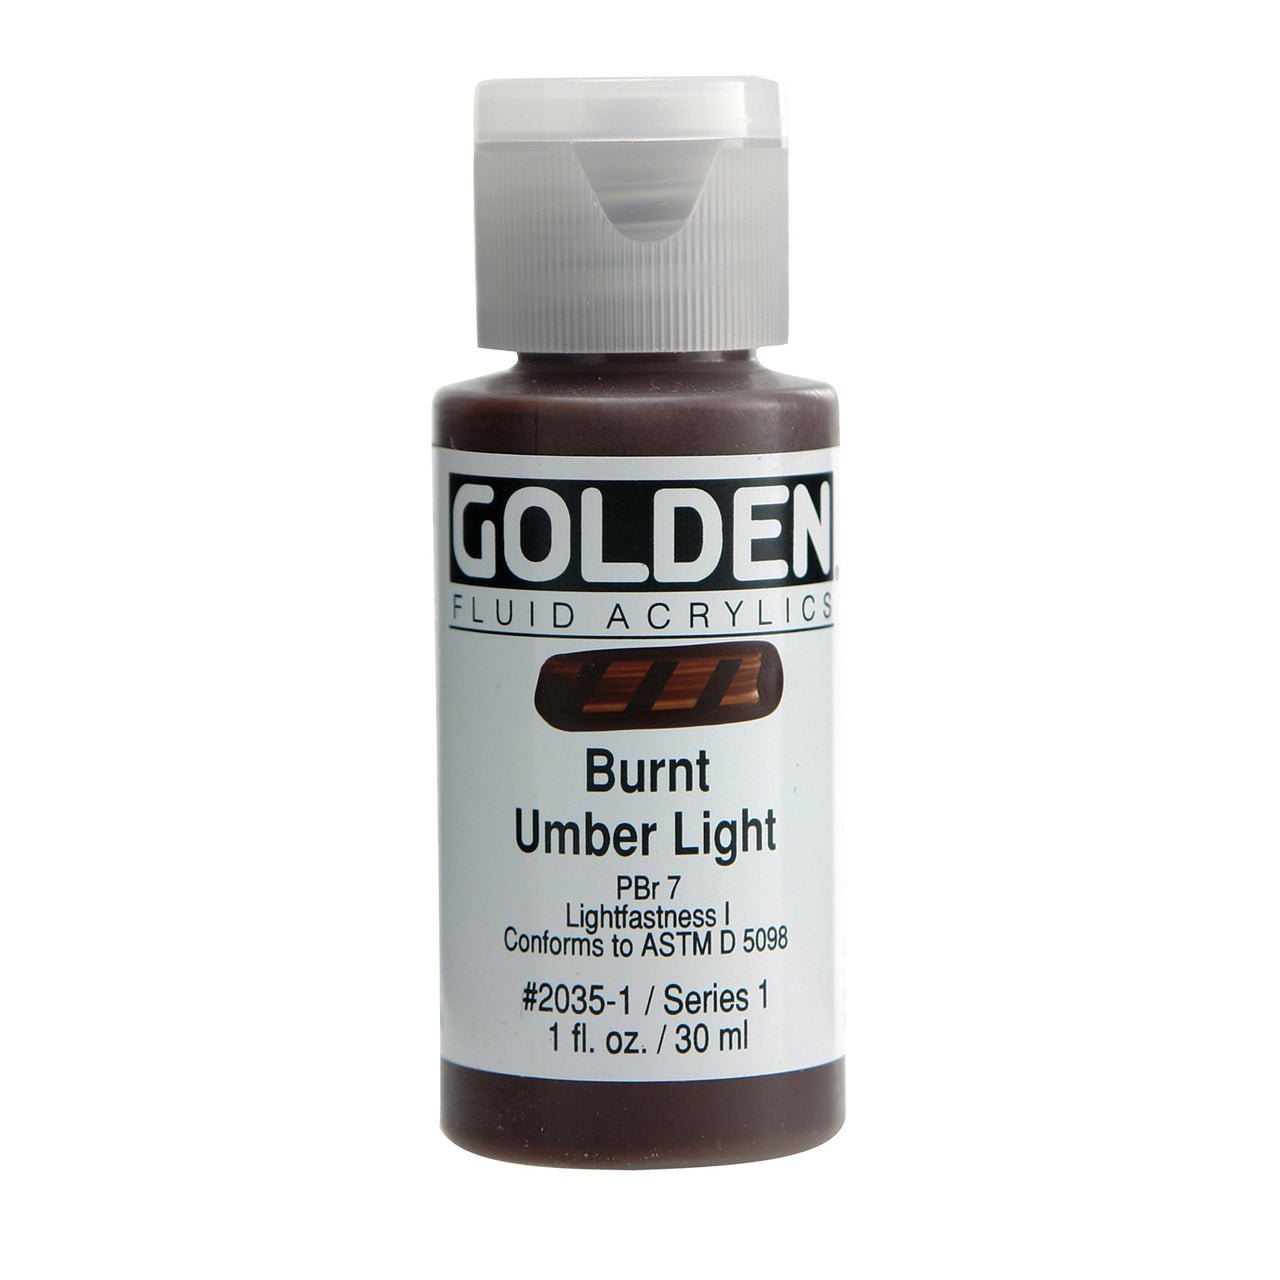 Golden Fluid Acrylic Burnt Umber Light 1 oz - merriartist.com